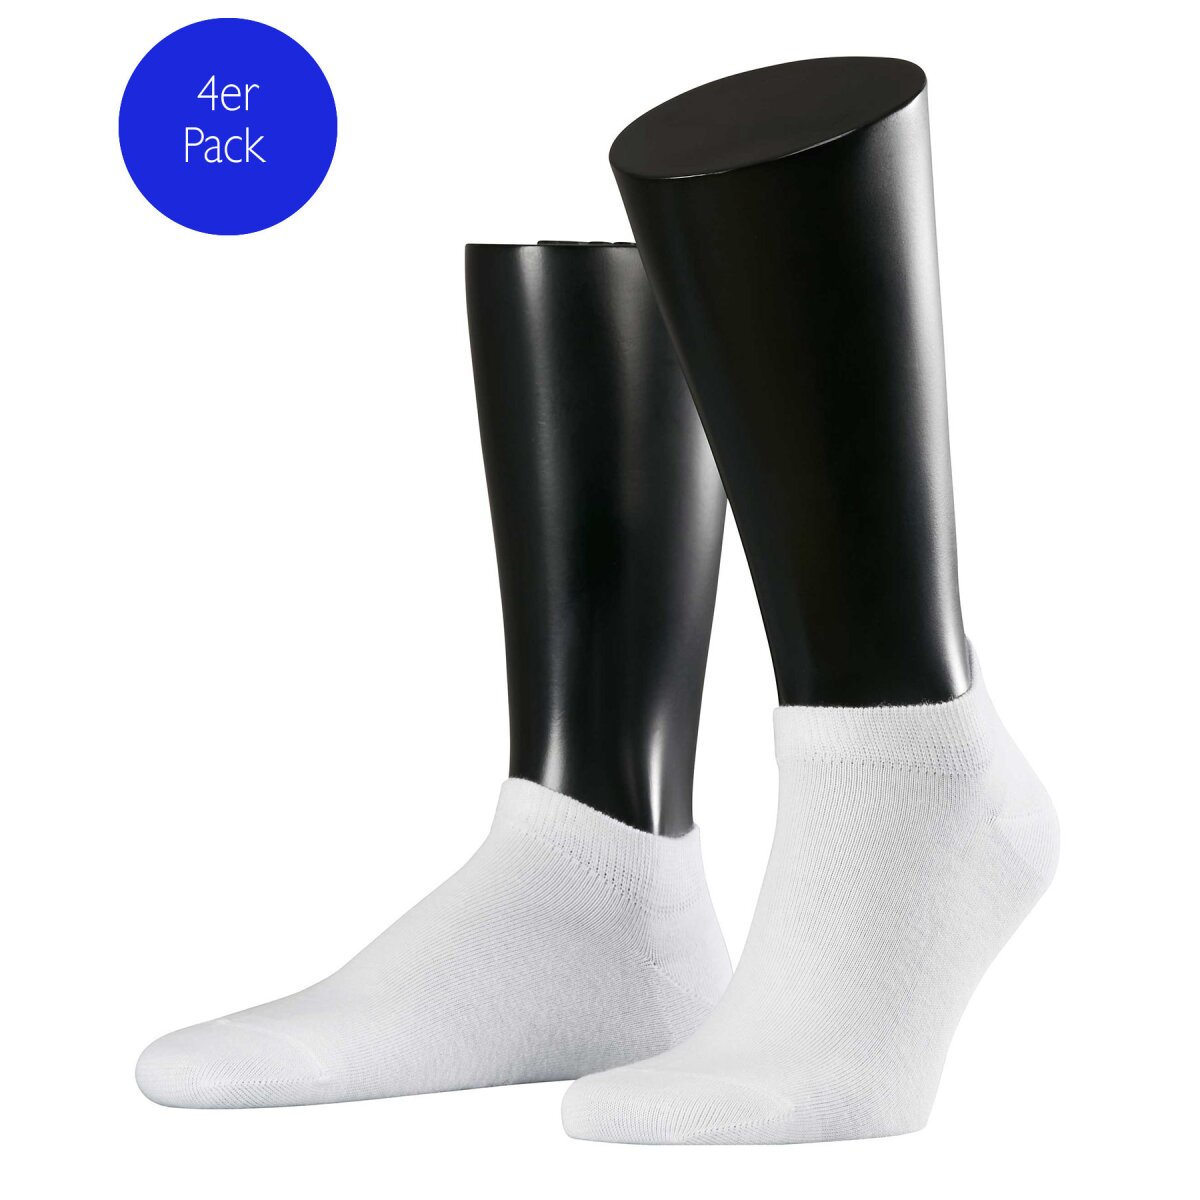 Esprit Herren Sneaker Socken € Einfarbig - Weiß, Sneaker - 14,45 Paar Socks 2